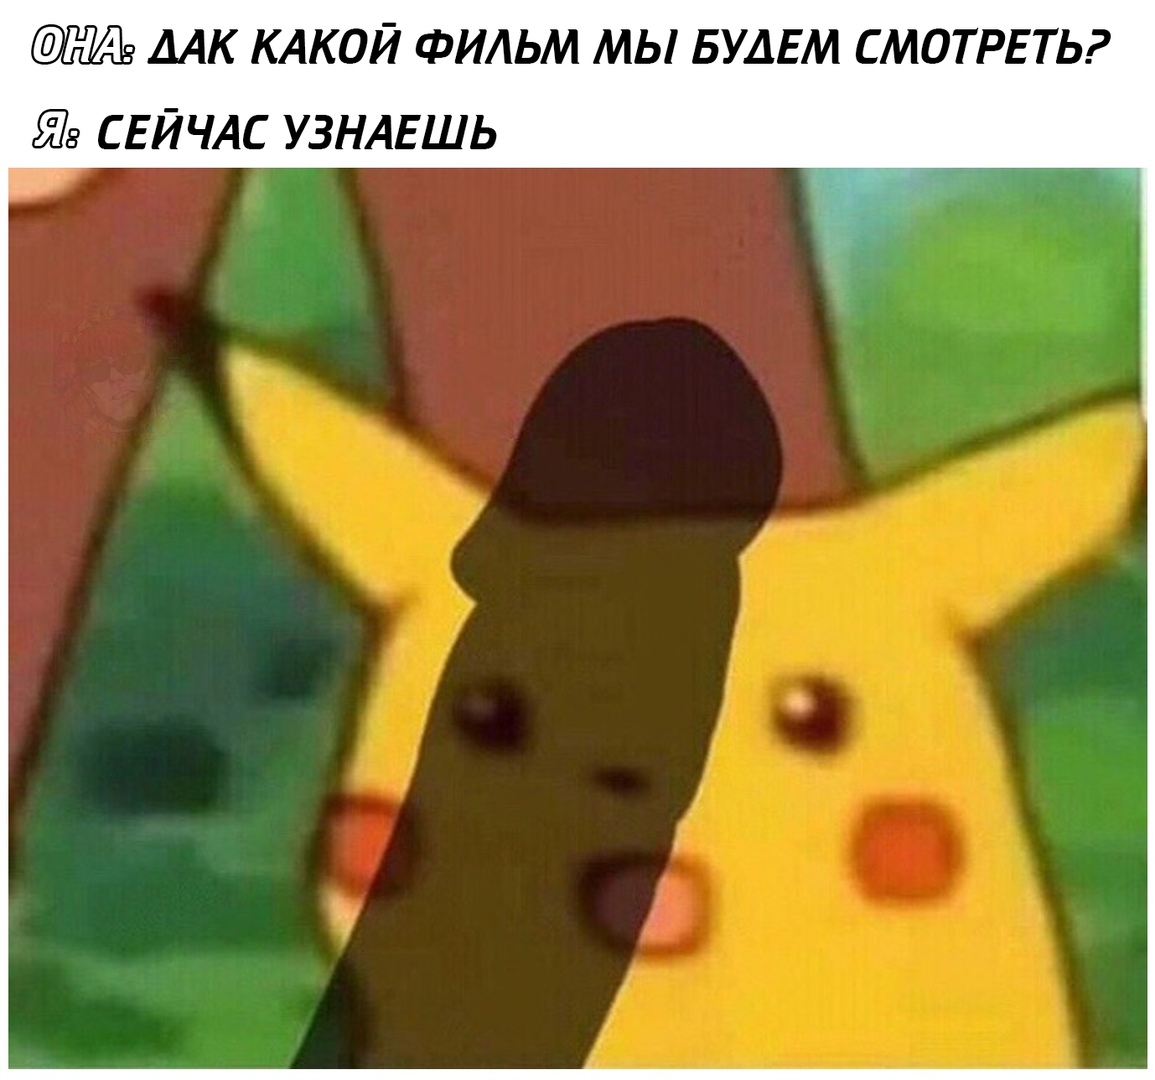 Pikachu dick shadow meme